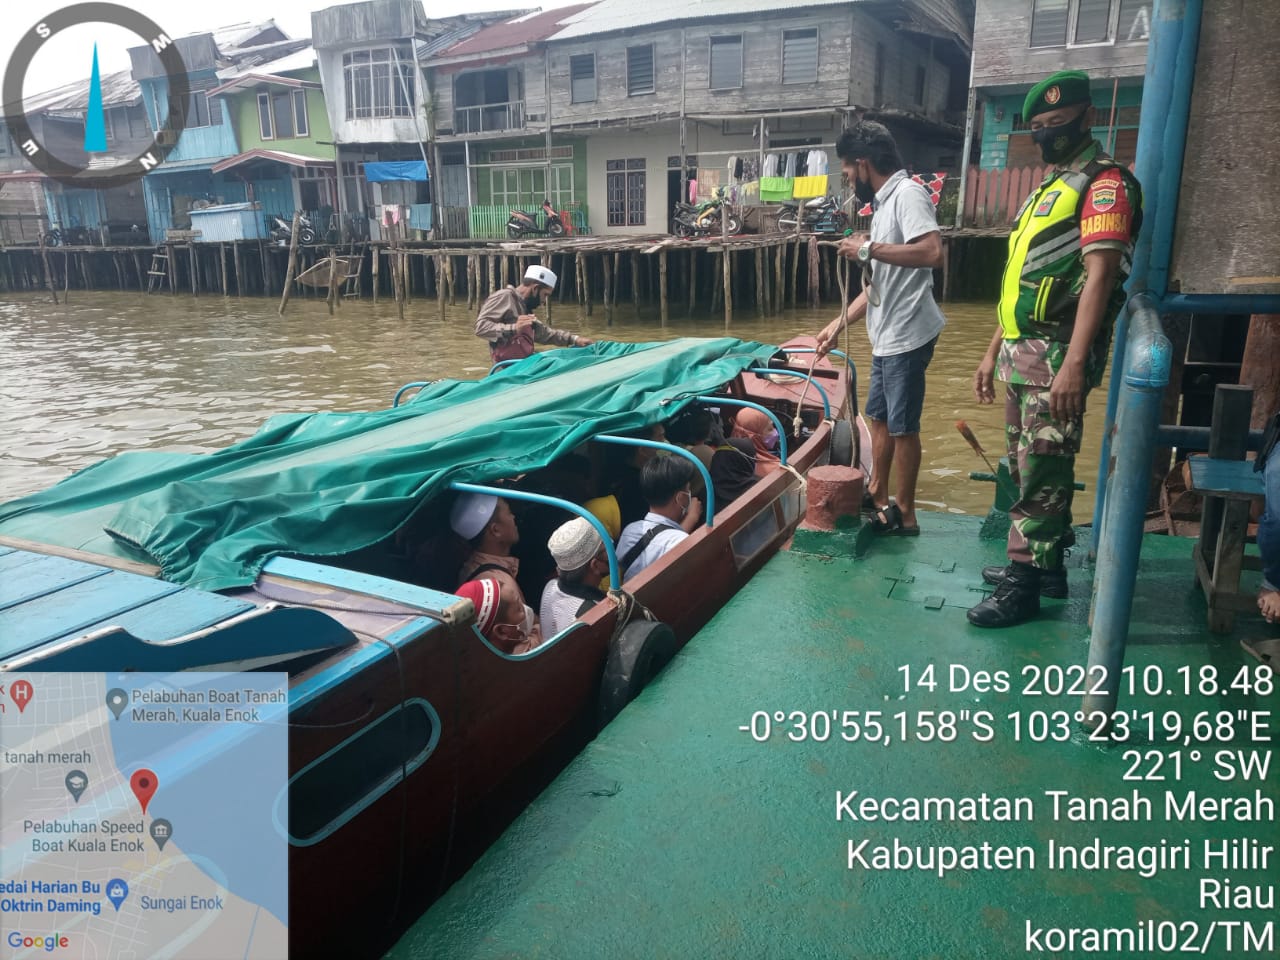 Serda M Ade Anggota Koramil 02/TM Giat Himbauan Protkes Kepada Penumpang Speedboat 